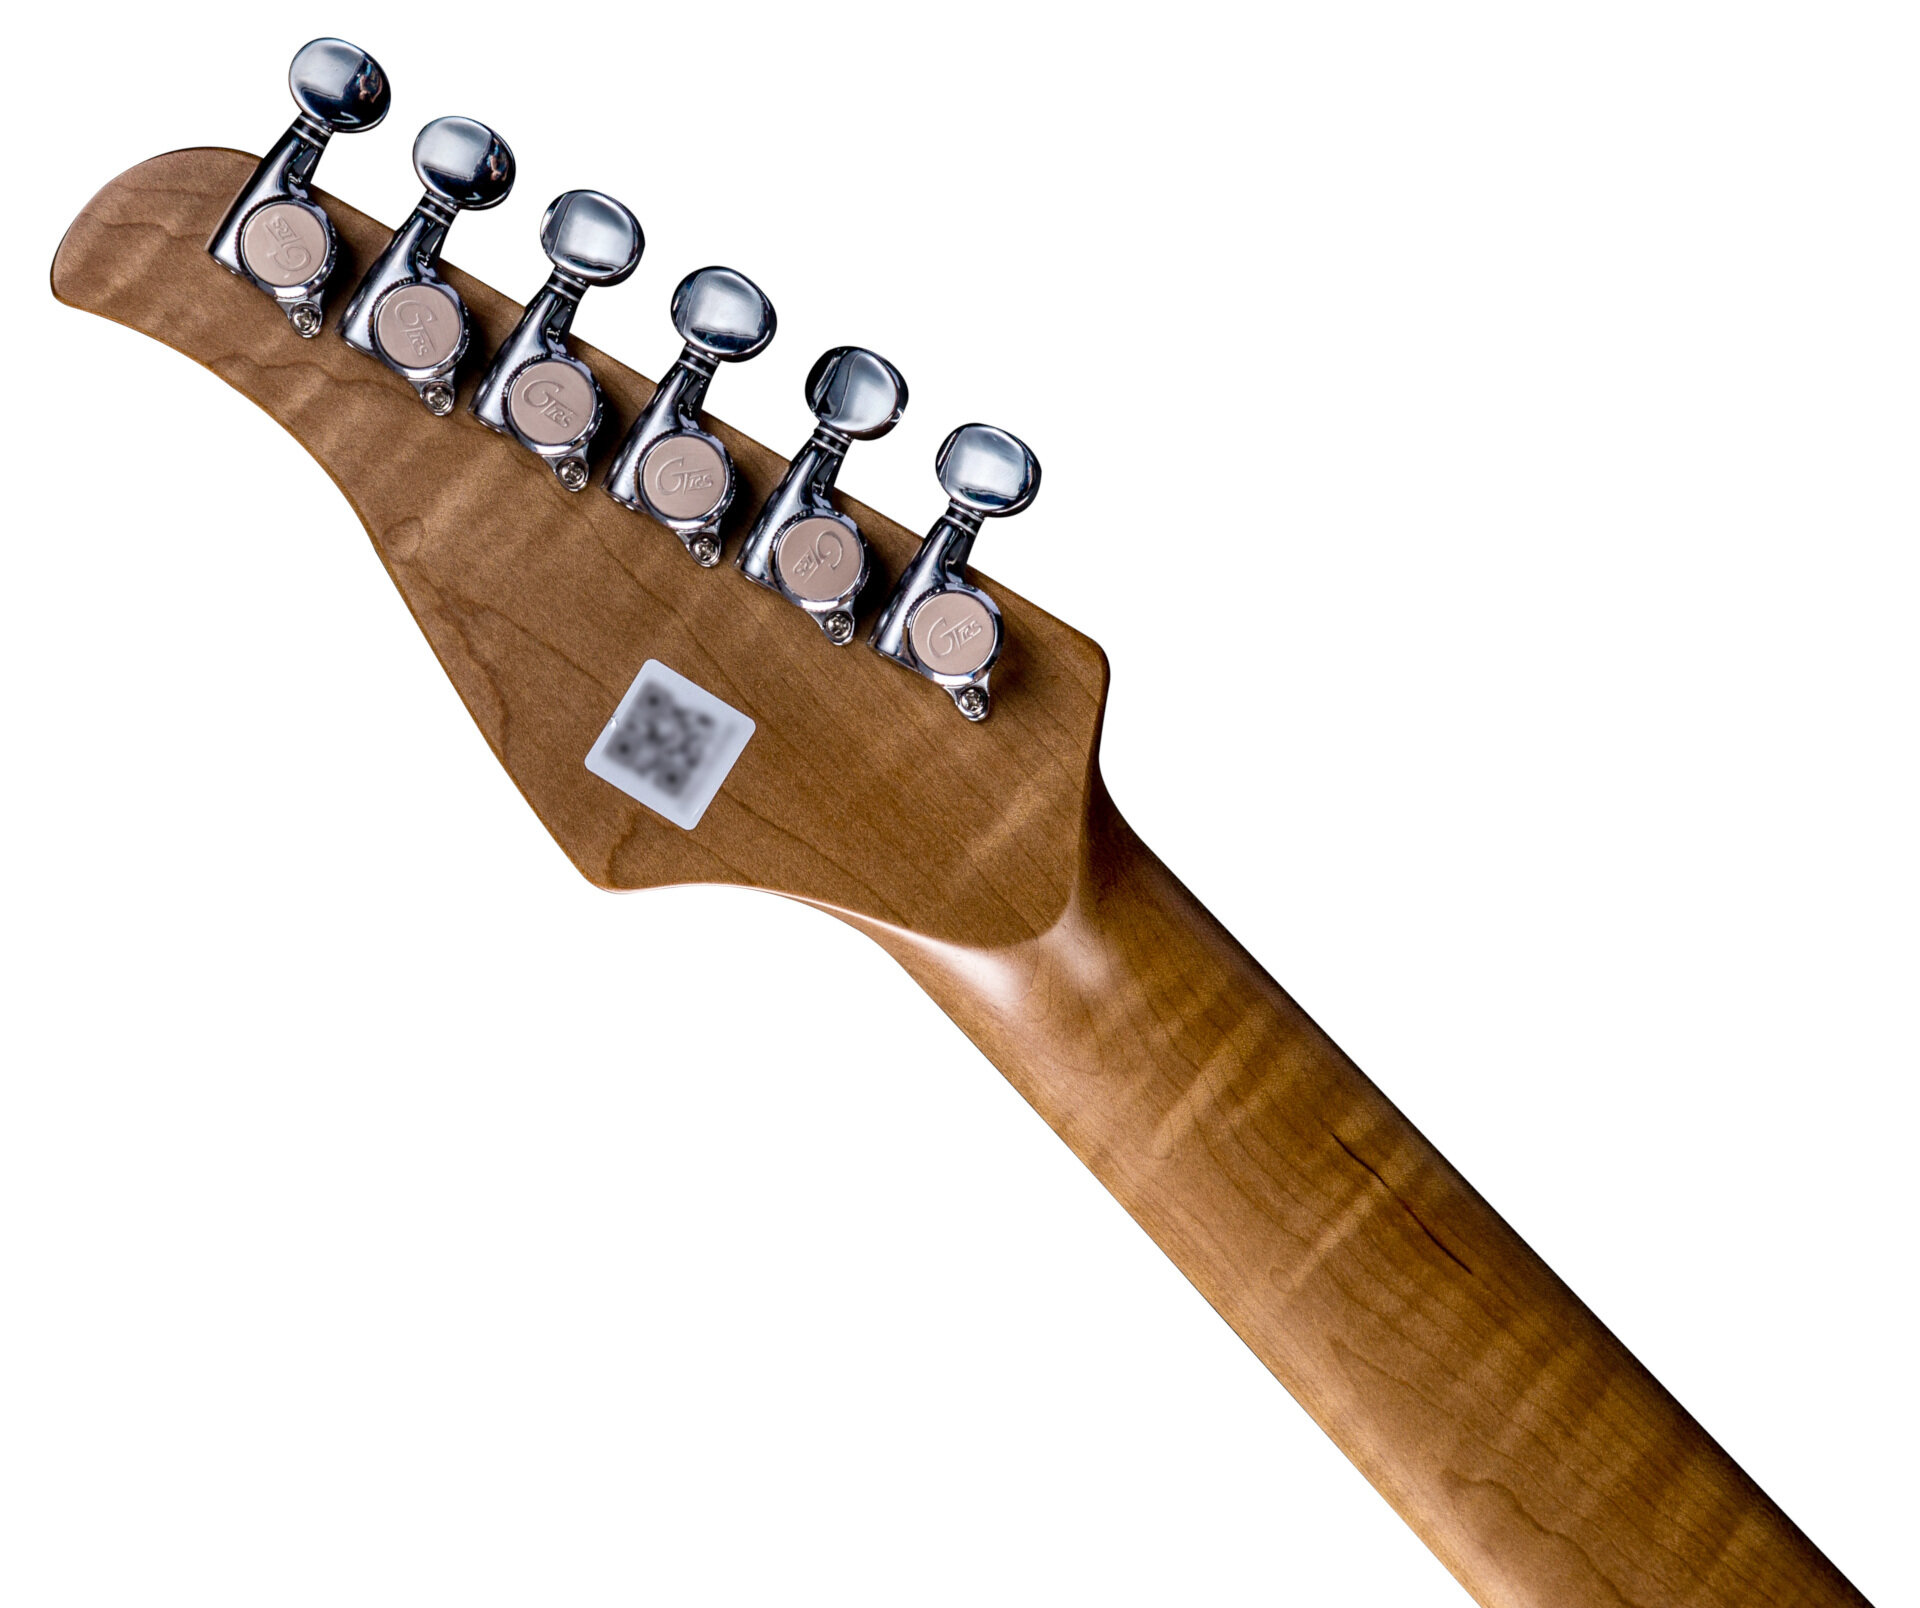 Mooer Gtrs P800 Pro Intelligent Guitar Hss Trem Rw - Fiesta Red - Modeling guitar - Variation 4